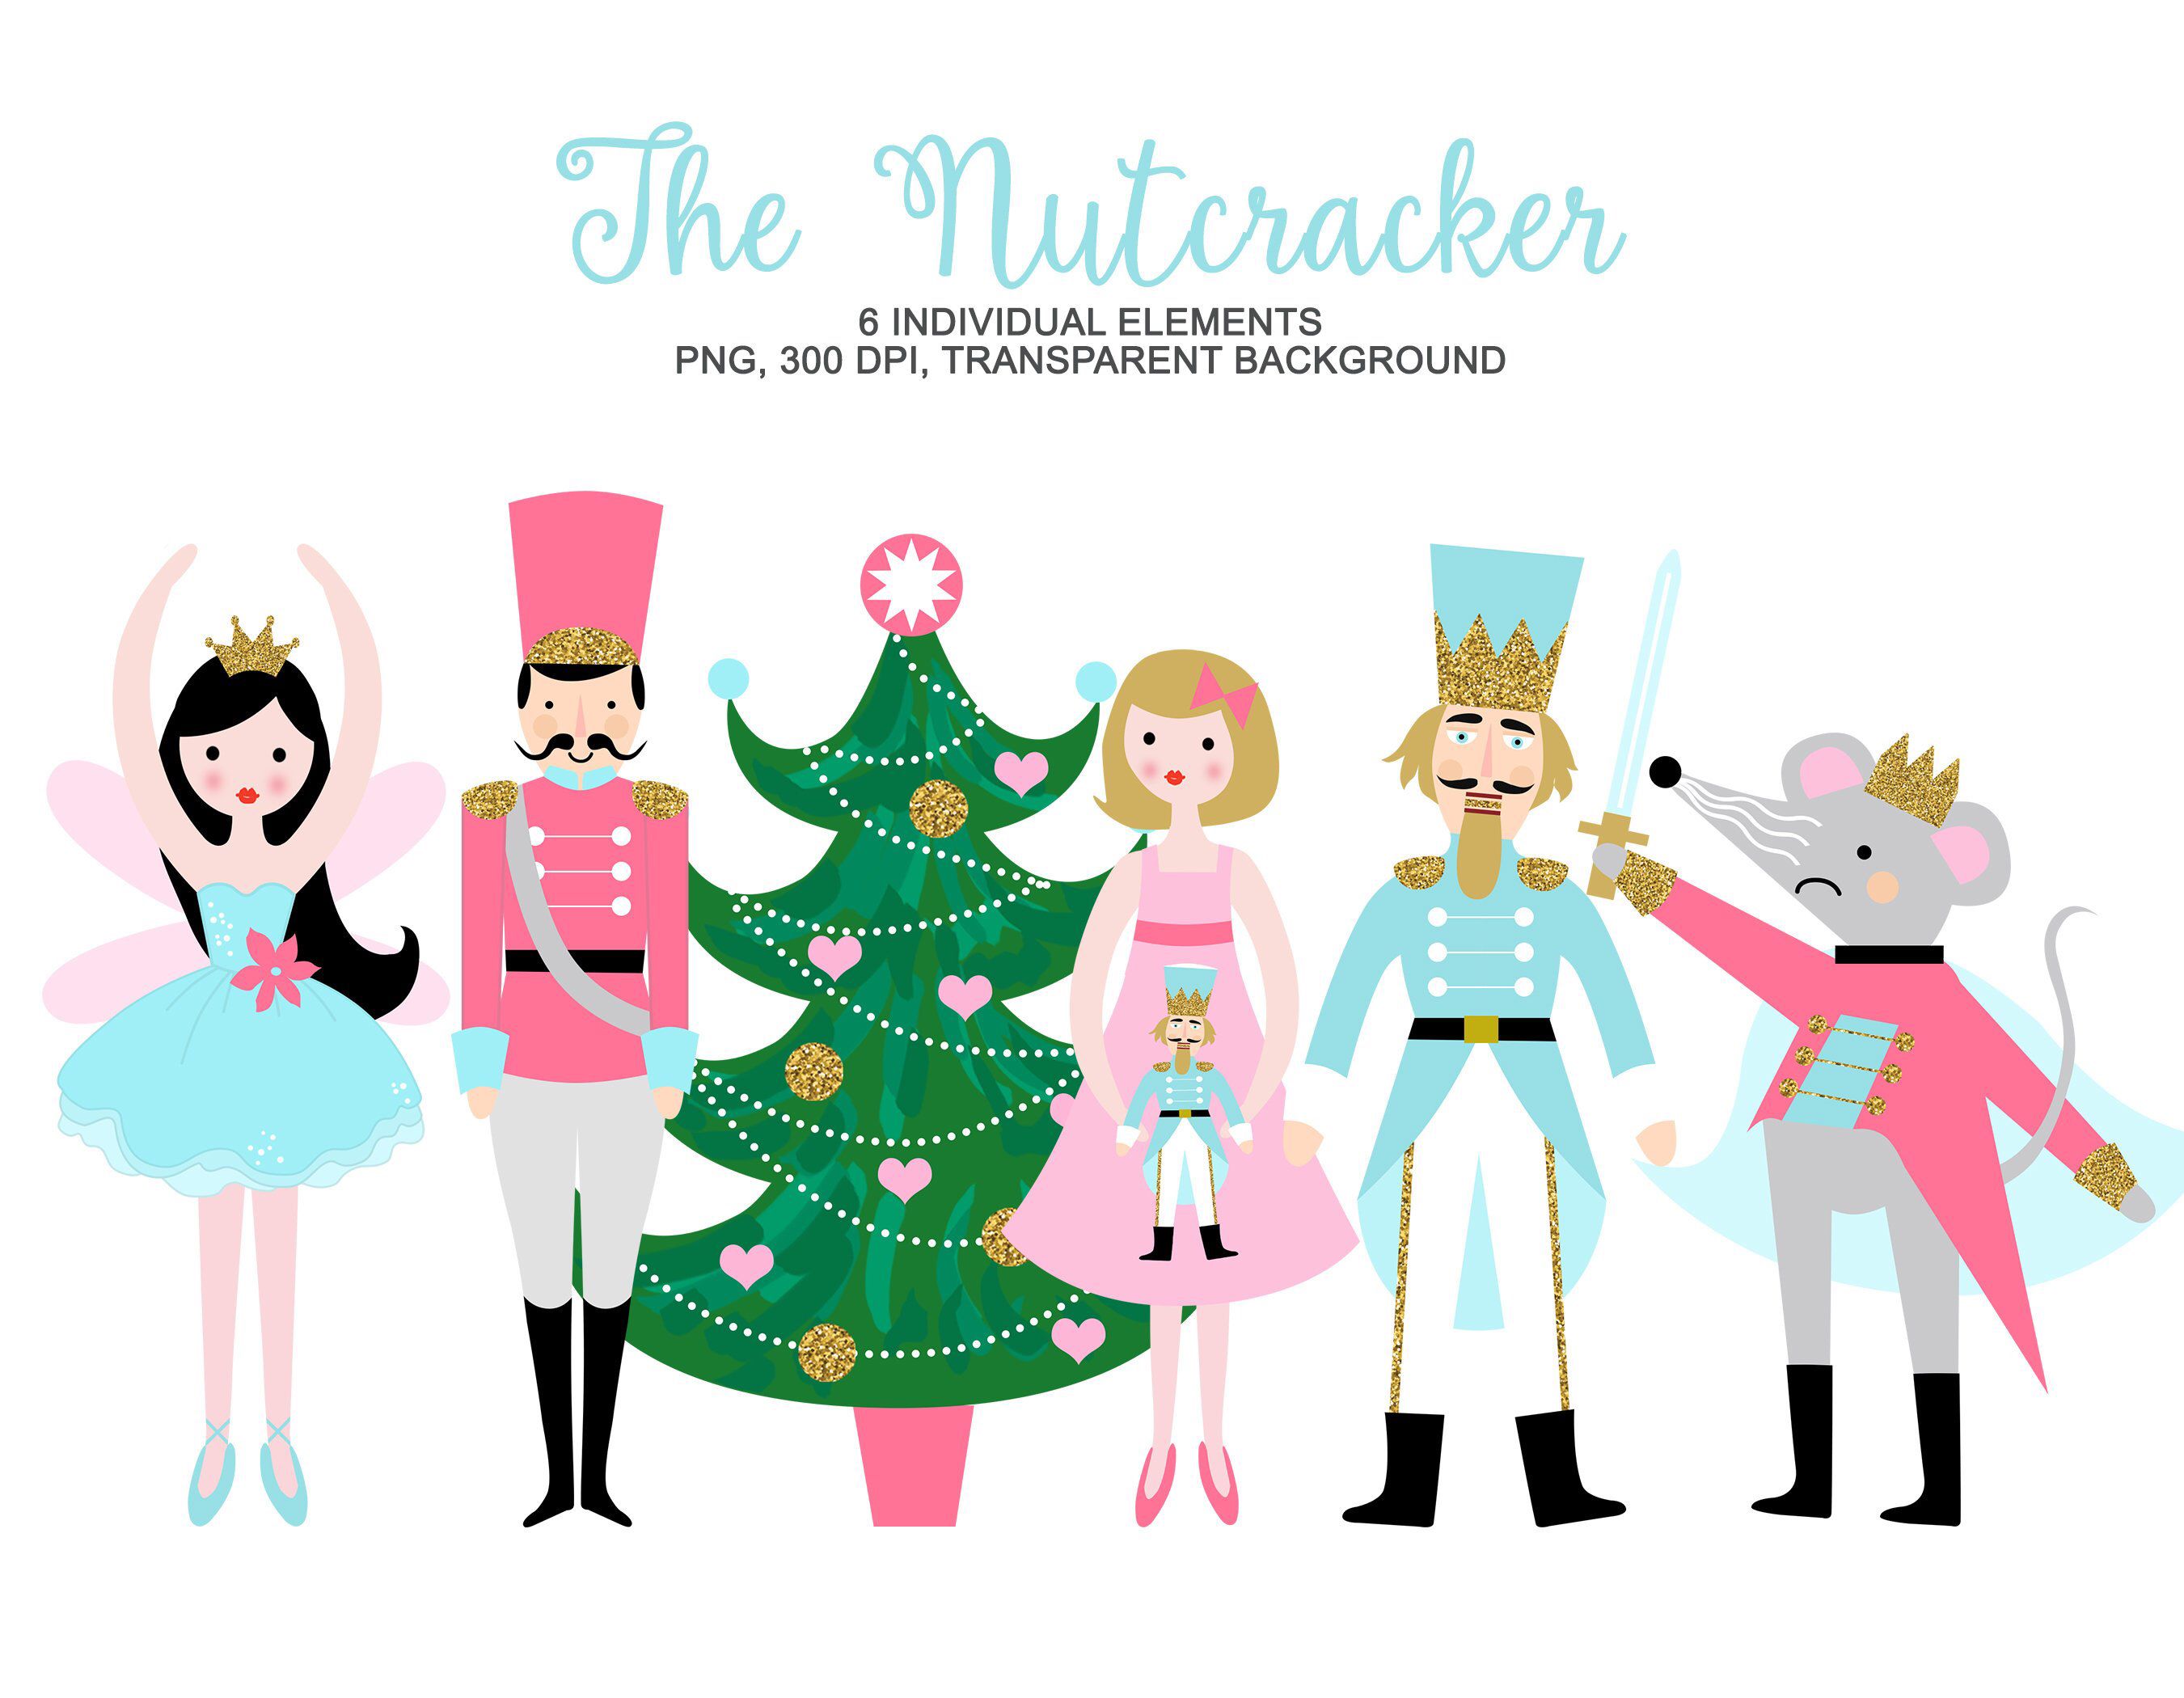 nutcracker suite clipart 10 free Cliparts | Download images on